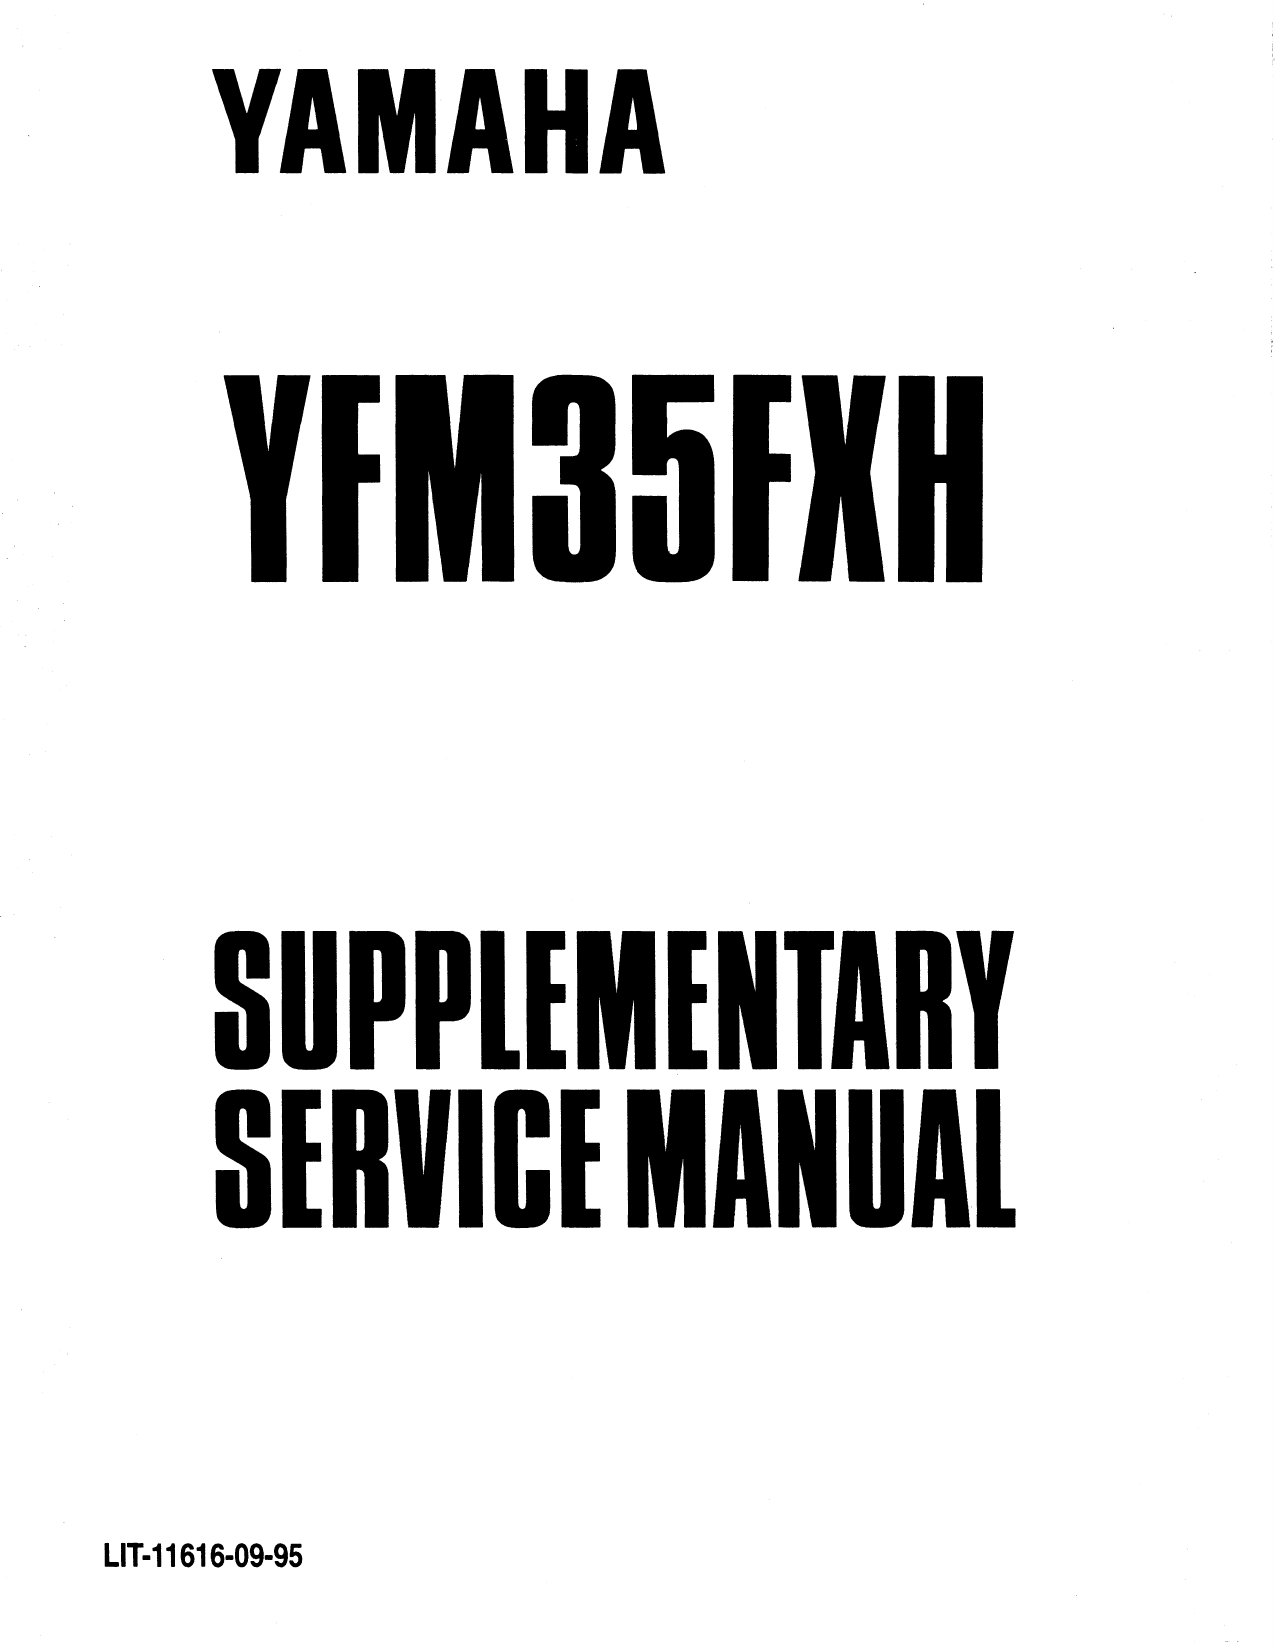 1995-2005 Yamaha Wolverine UTV repair and service manual Preview image 2